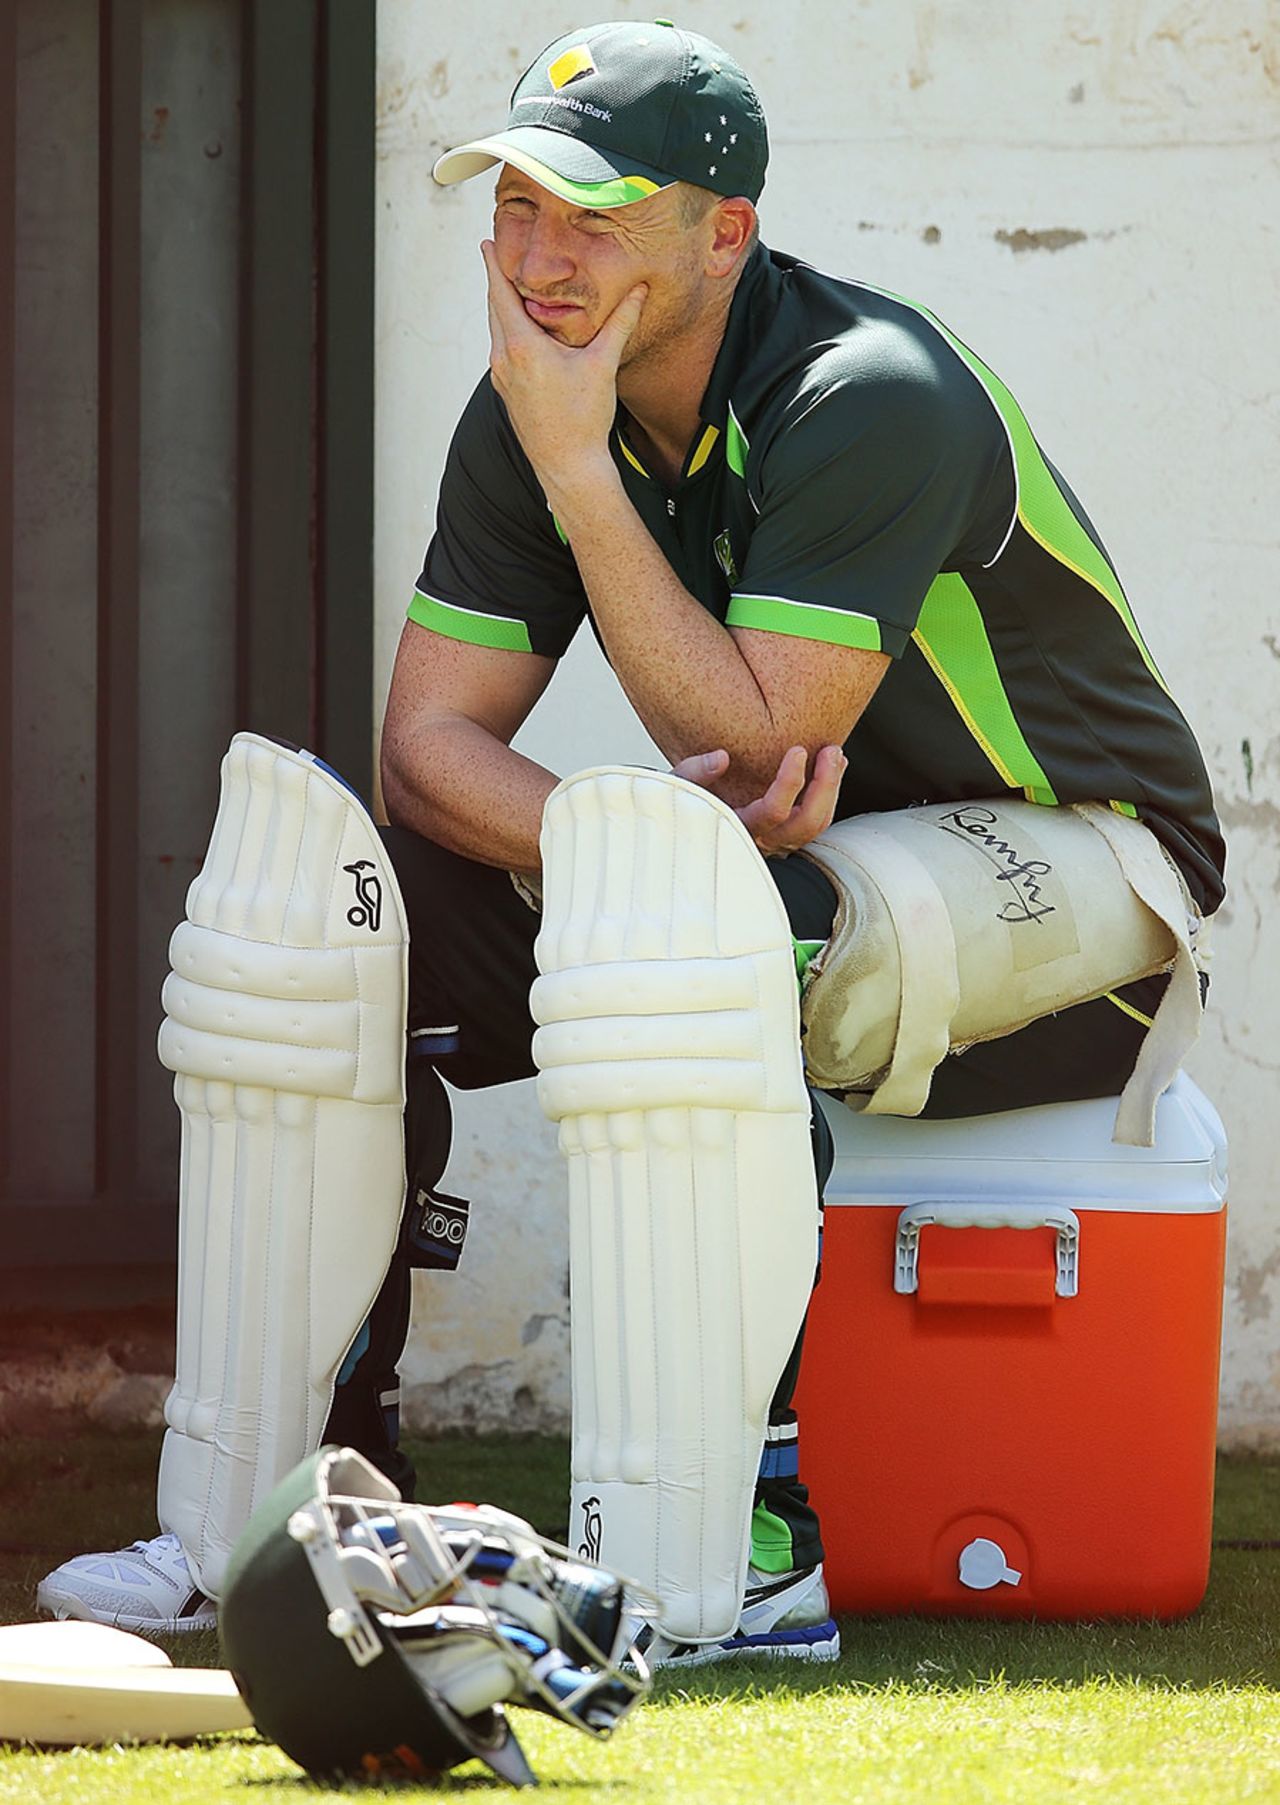 A pensive Brad Haddin awaits his turn at the nets, Centurion, February 11, 2014